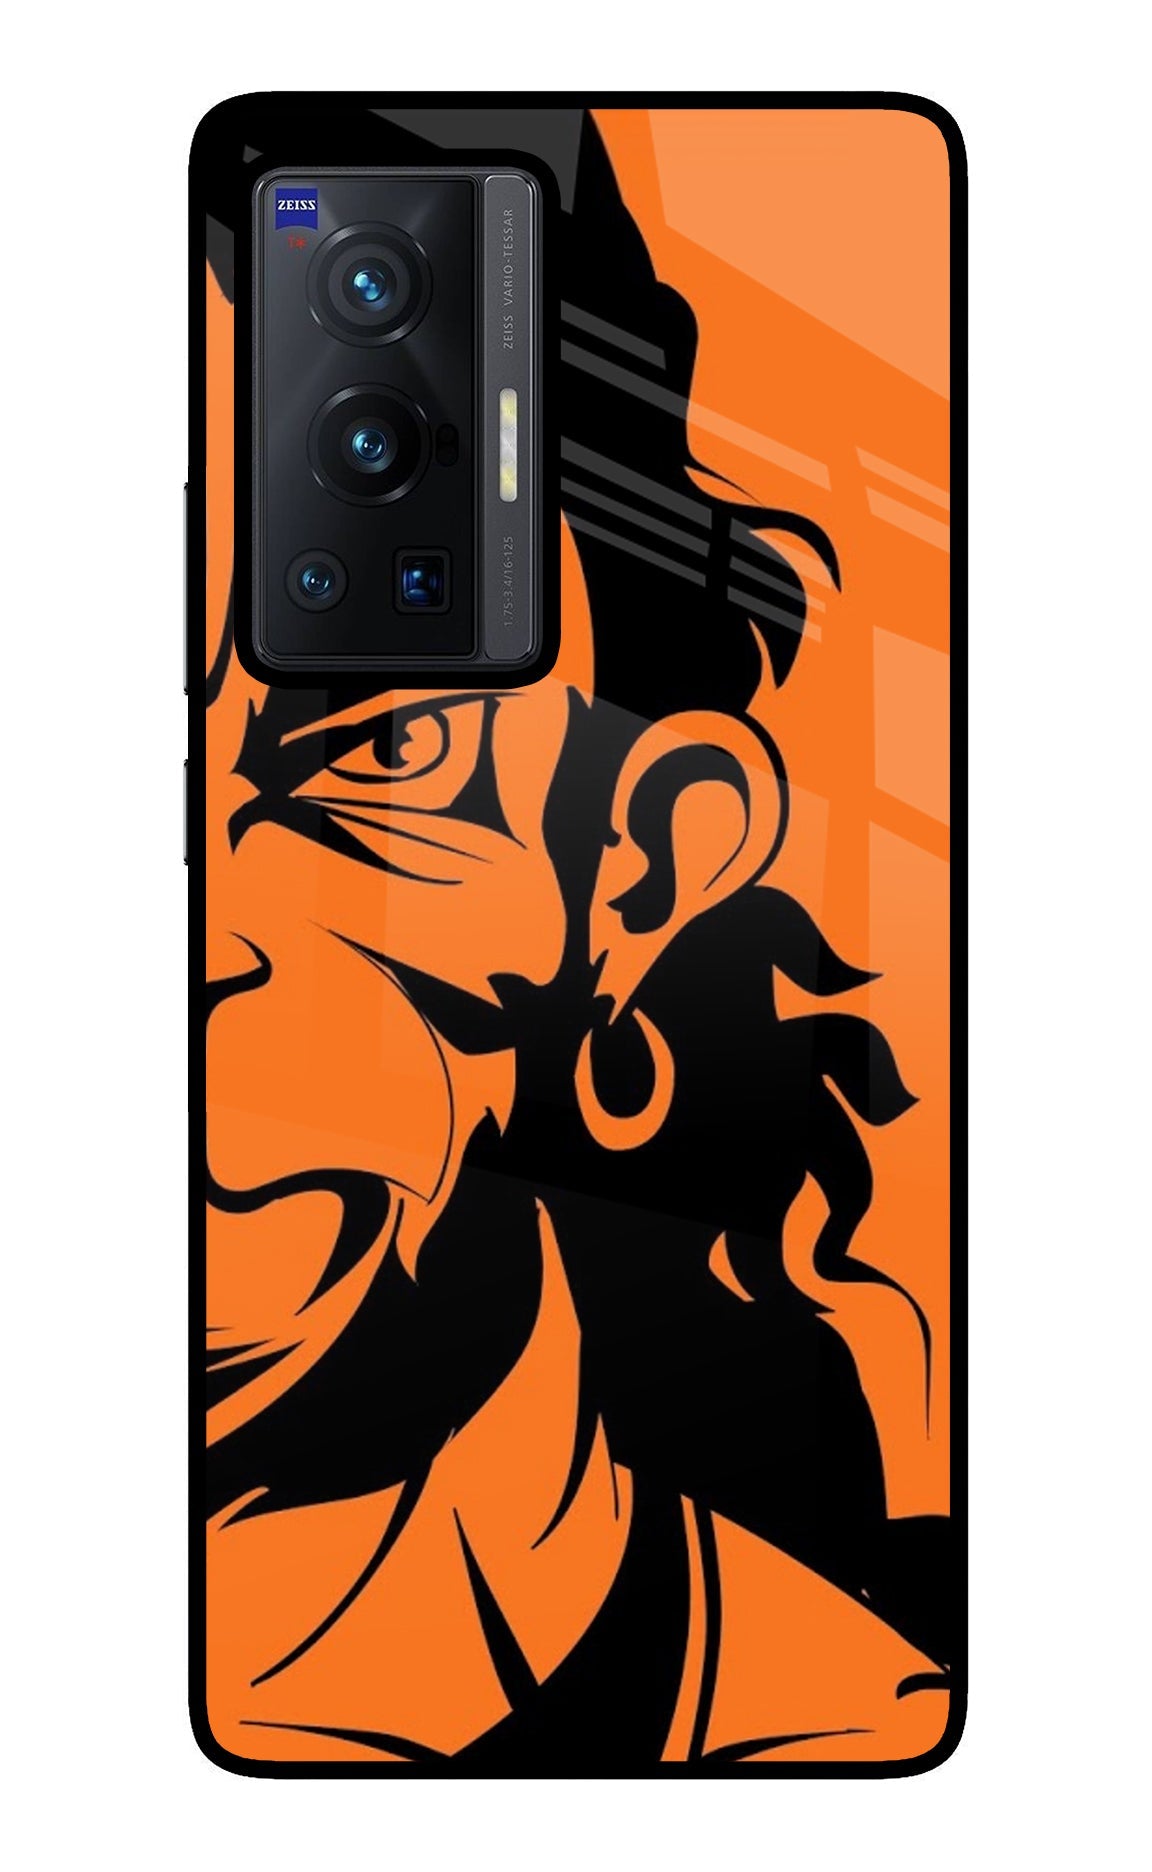 Hanuman Vivo X70 Pro Back Cover